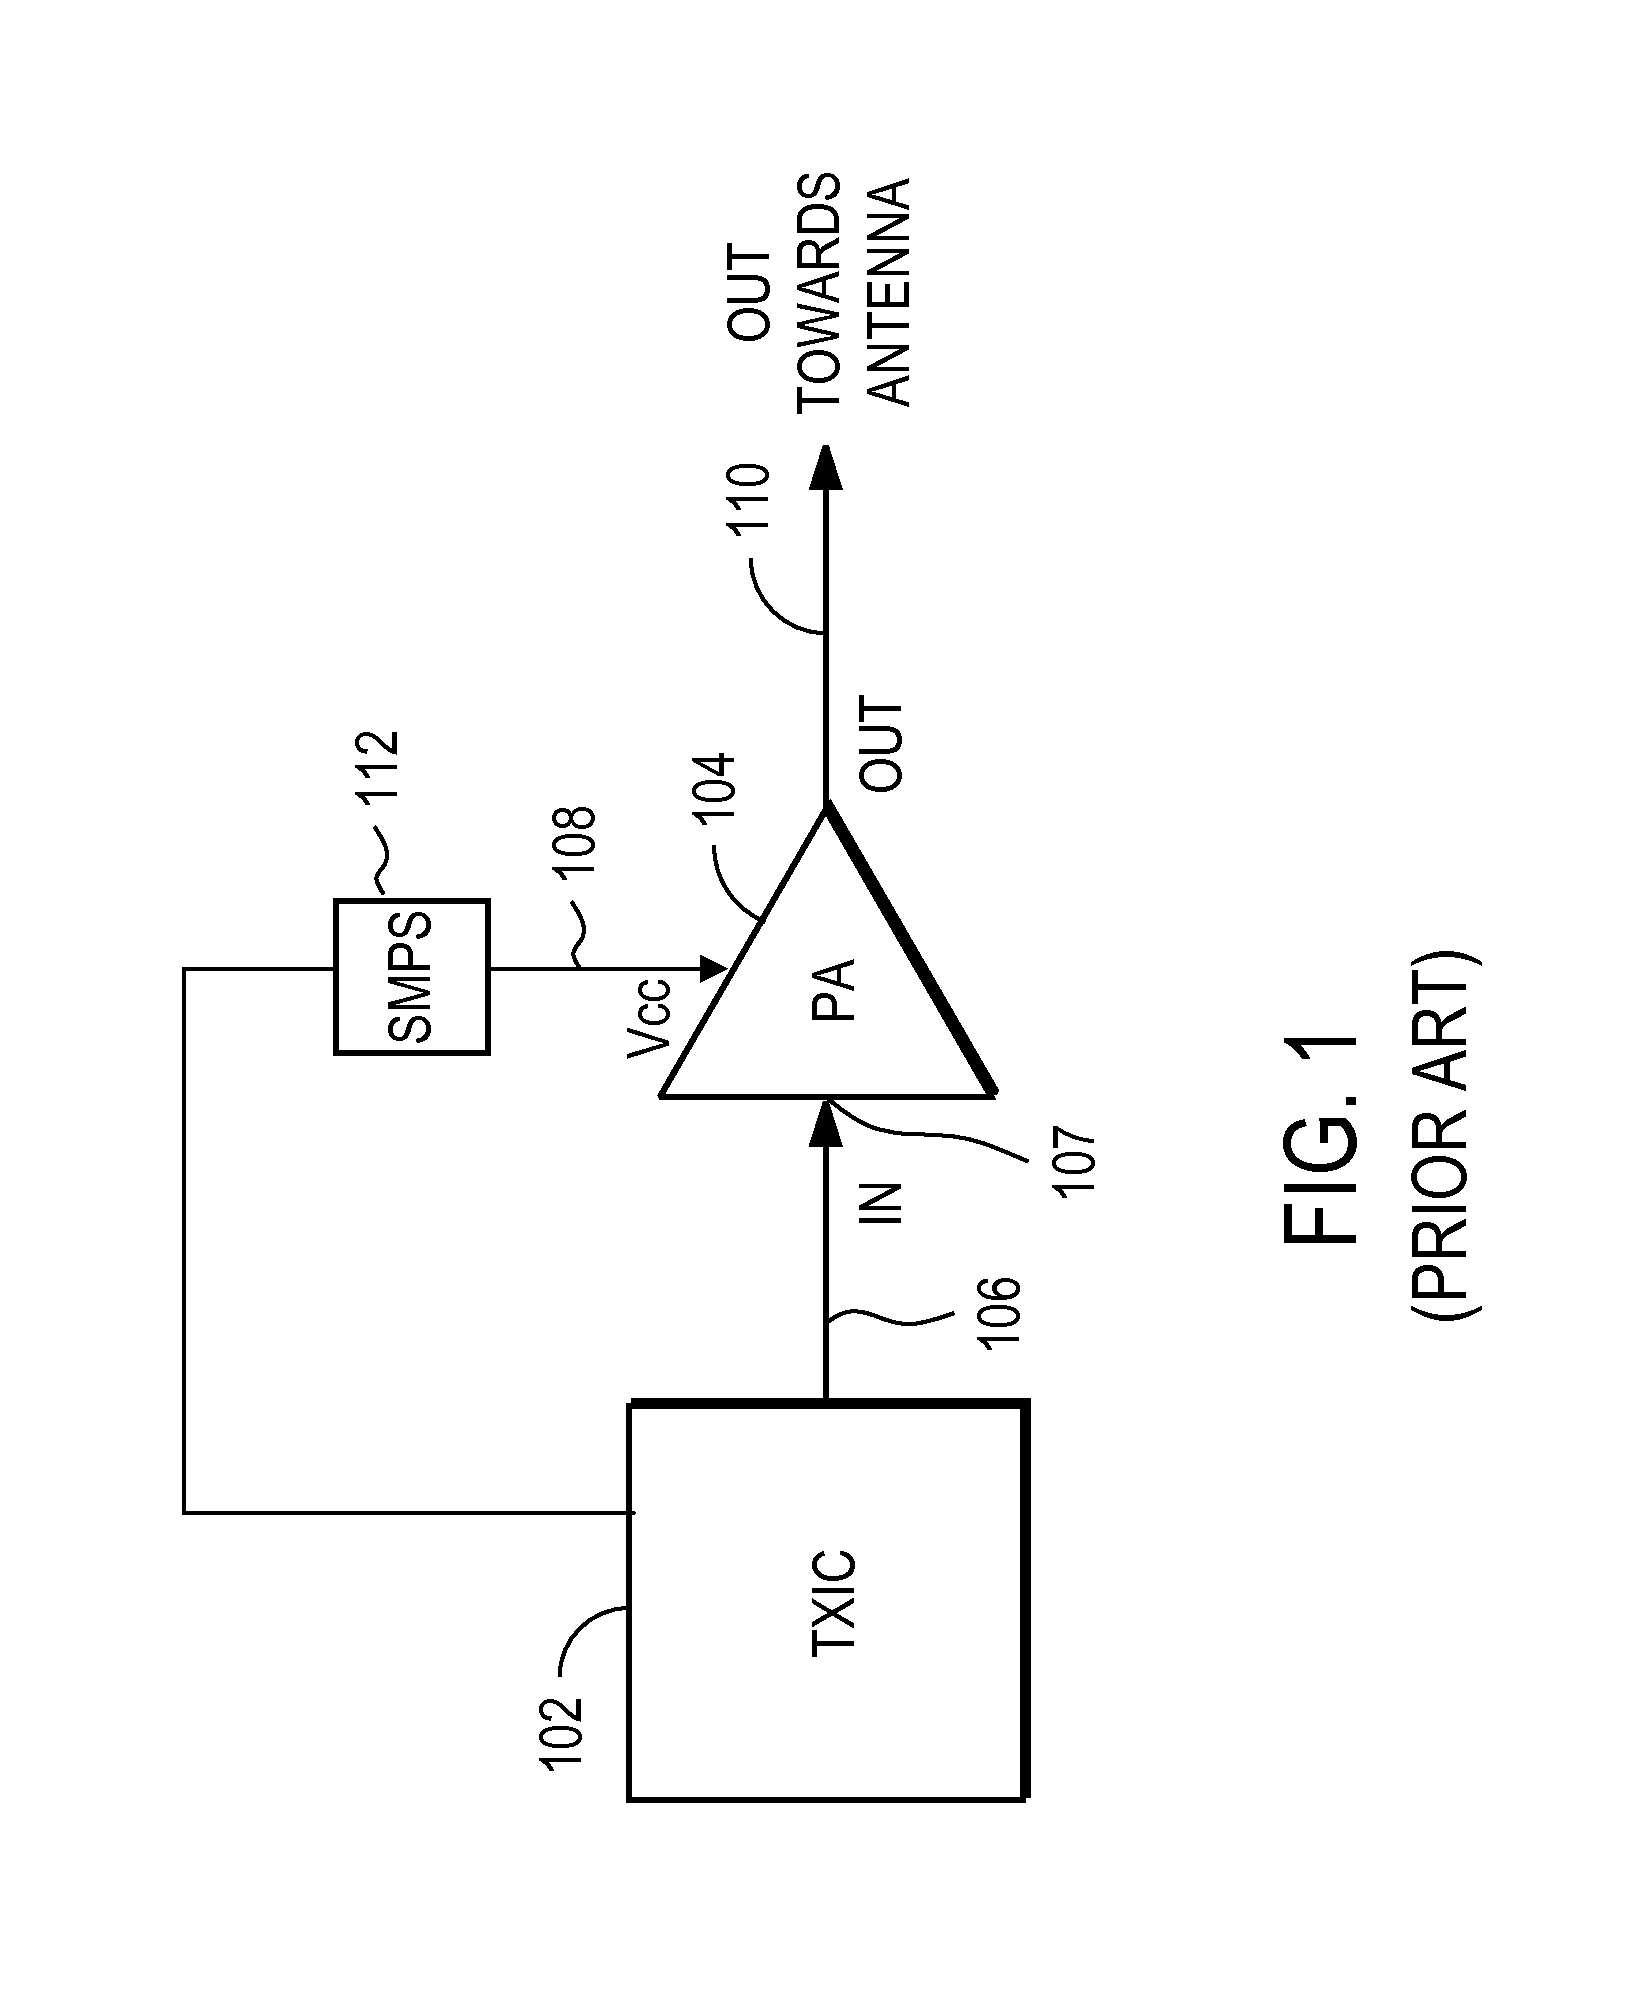 RF power amplifier circuit with mismatch tolerance